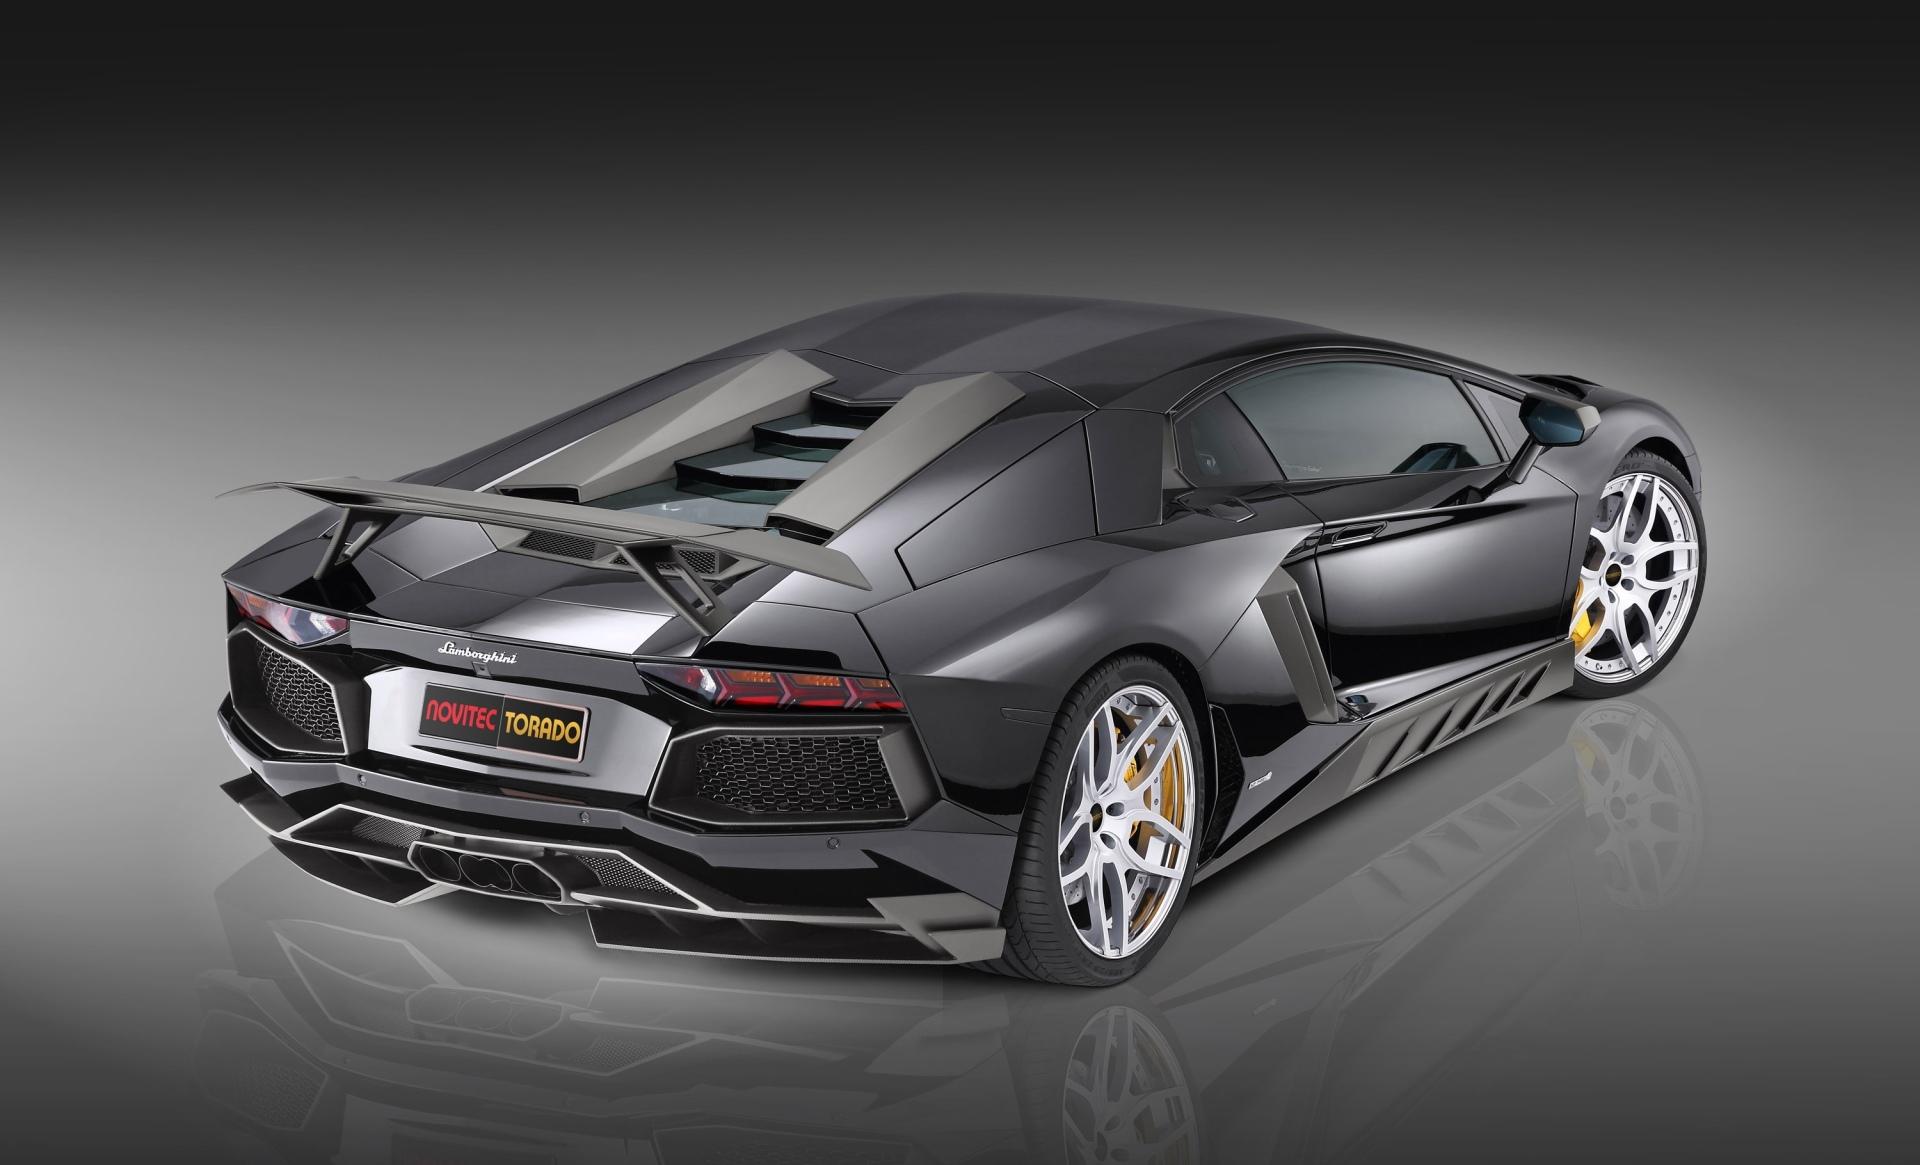 Lamborghini Novitec Torado at 750 x 1334 iPhone 6 size wallpapers HD quality